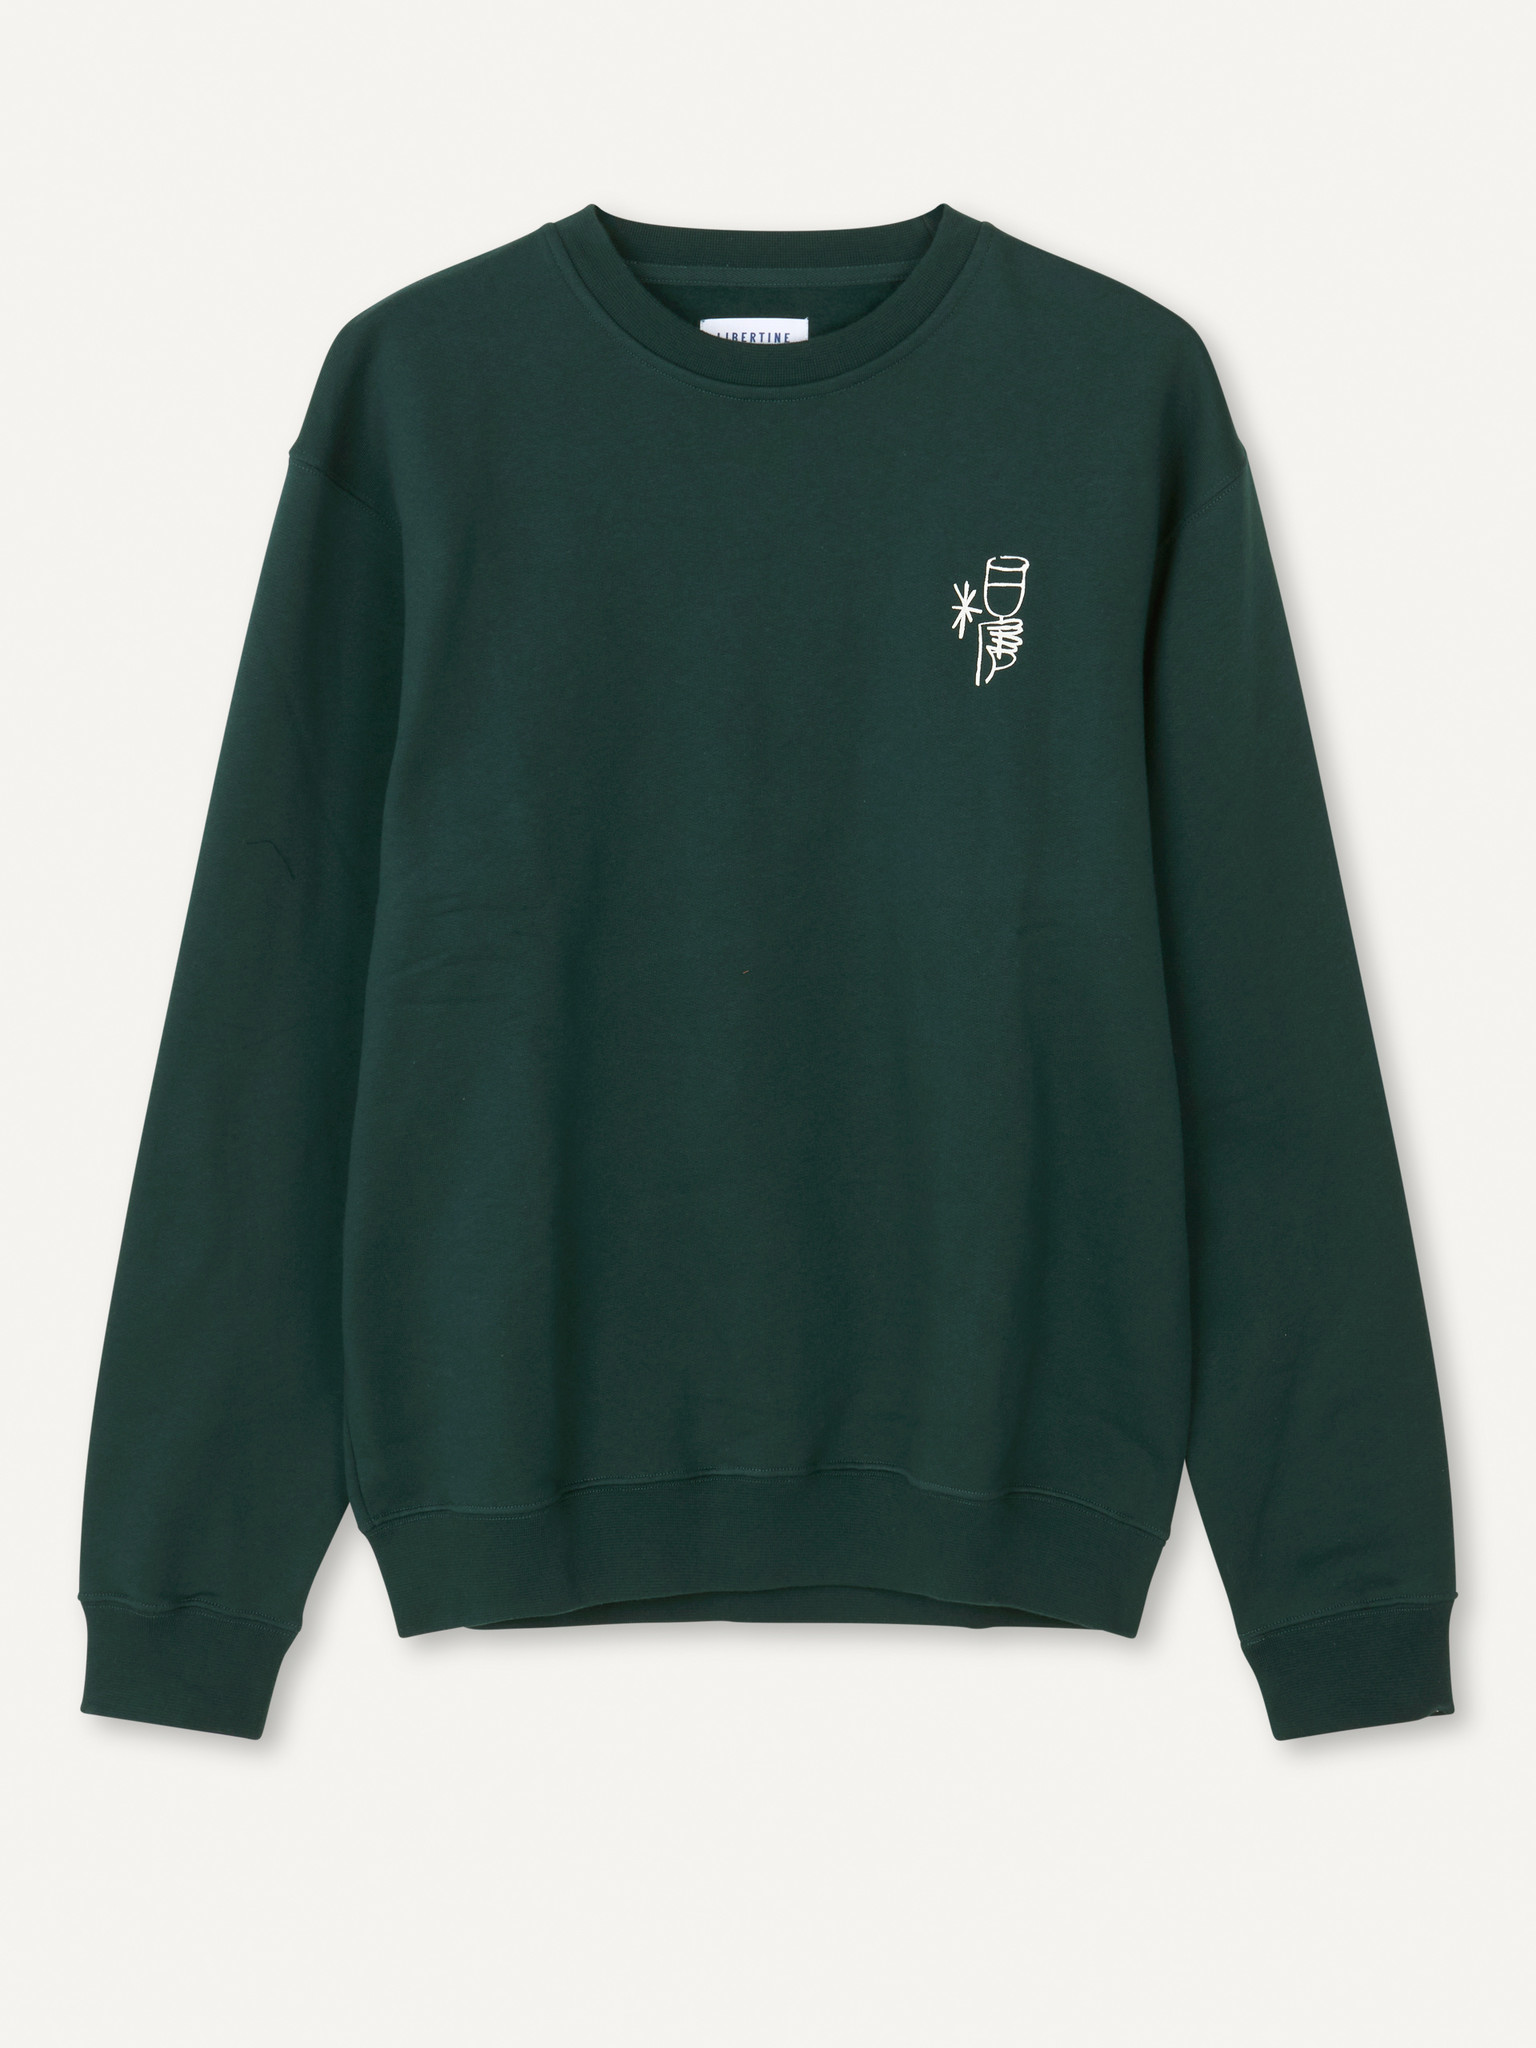 Society Sweatershirt Refill Groen-1